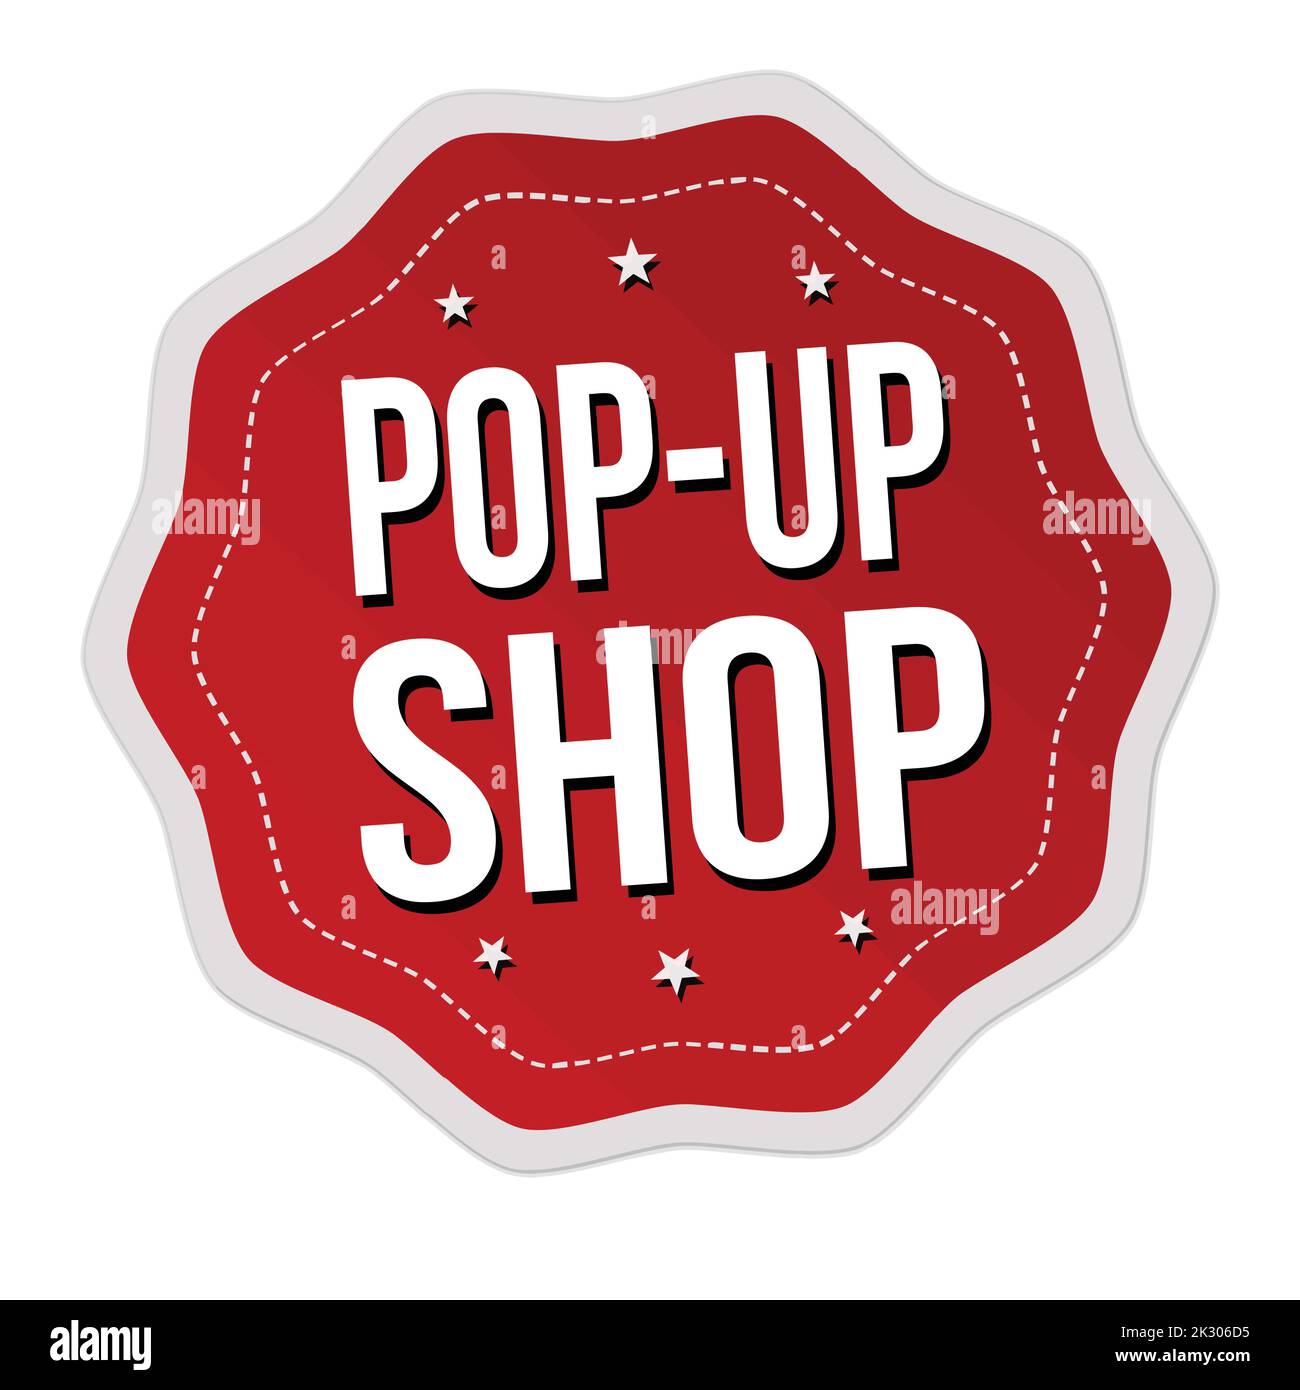 Pop-up shop label or sticker on white background, vector illustration Stock Vector